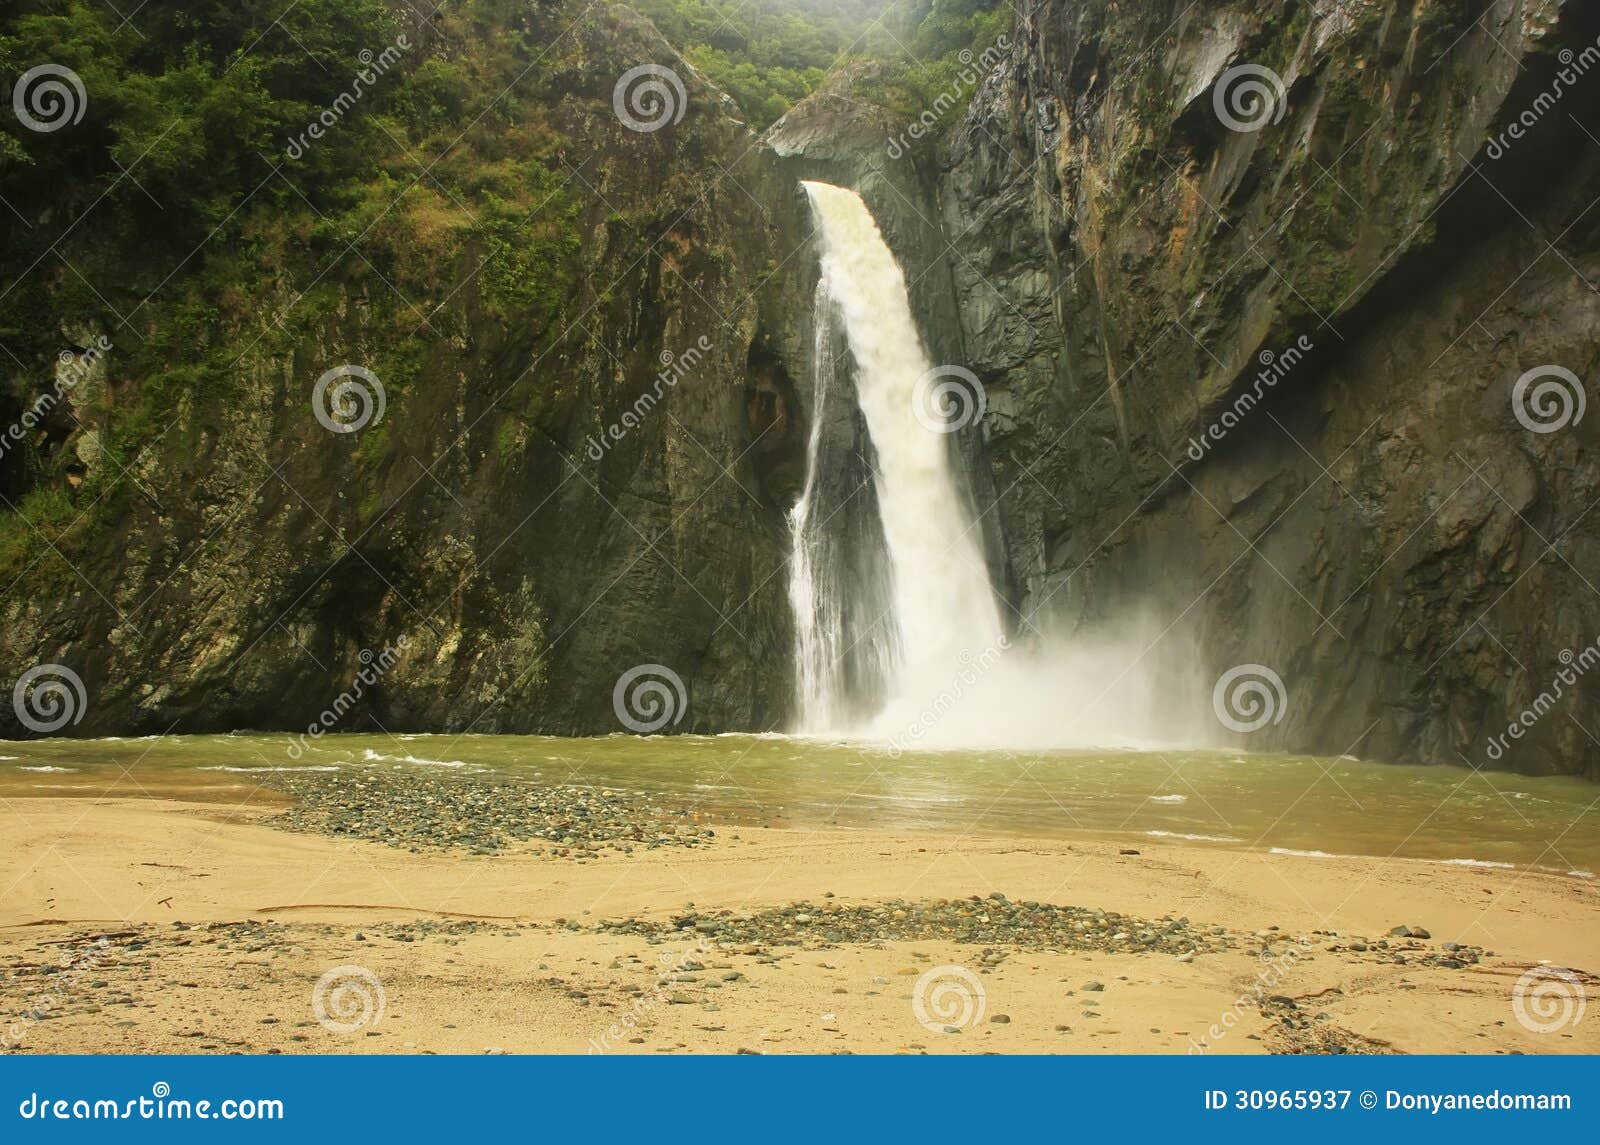 salto jimenoa uno waterfall, jarabacoa